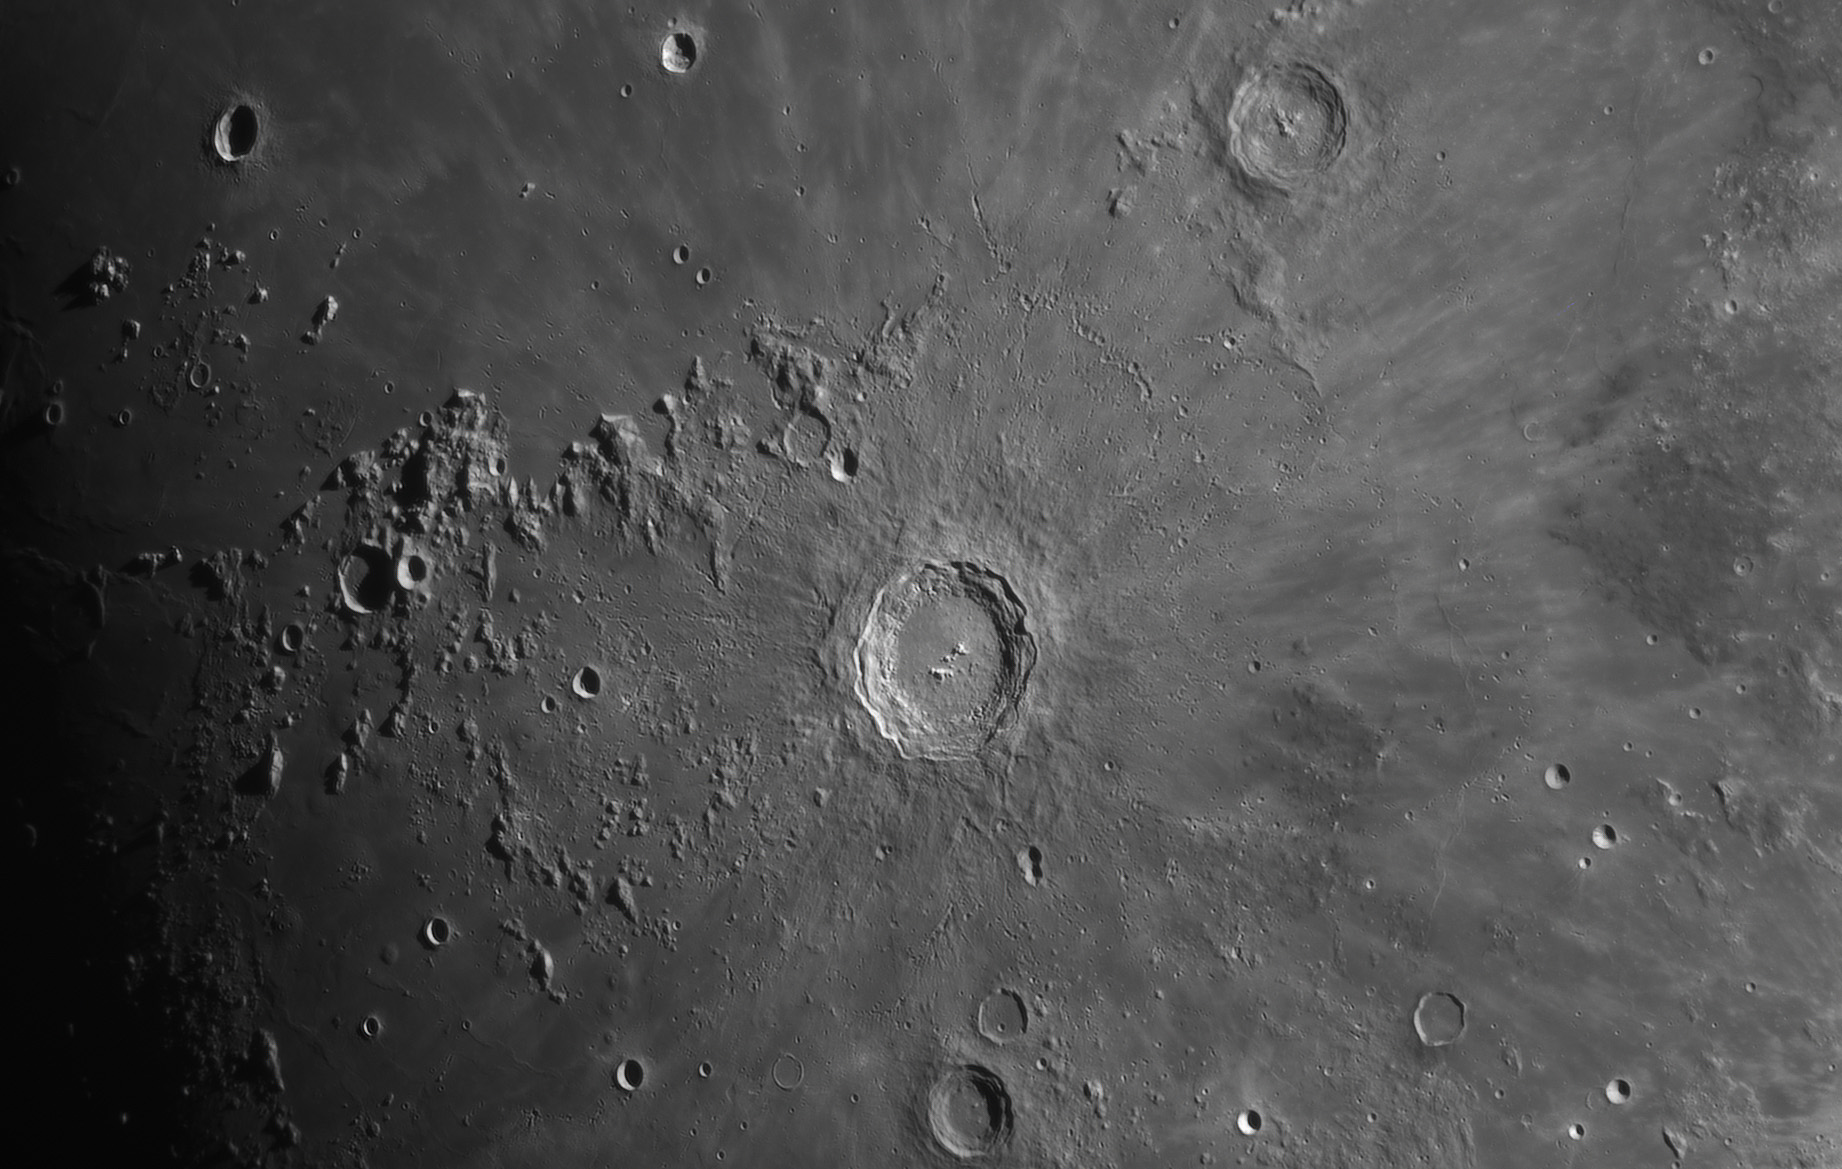 Mond - Copernicus 